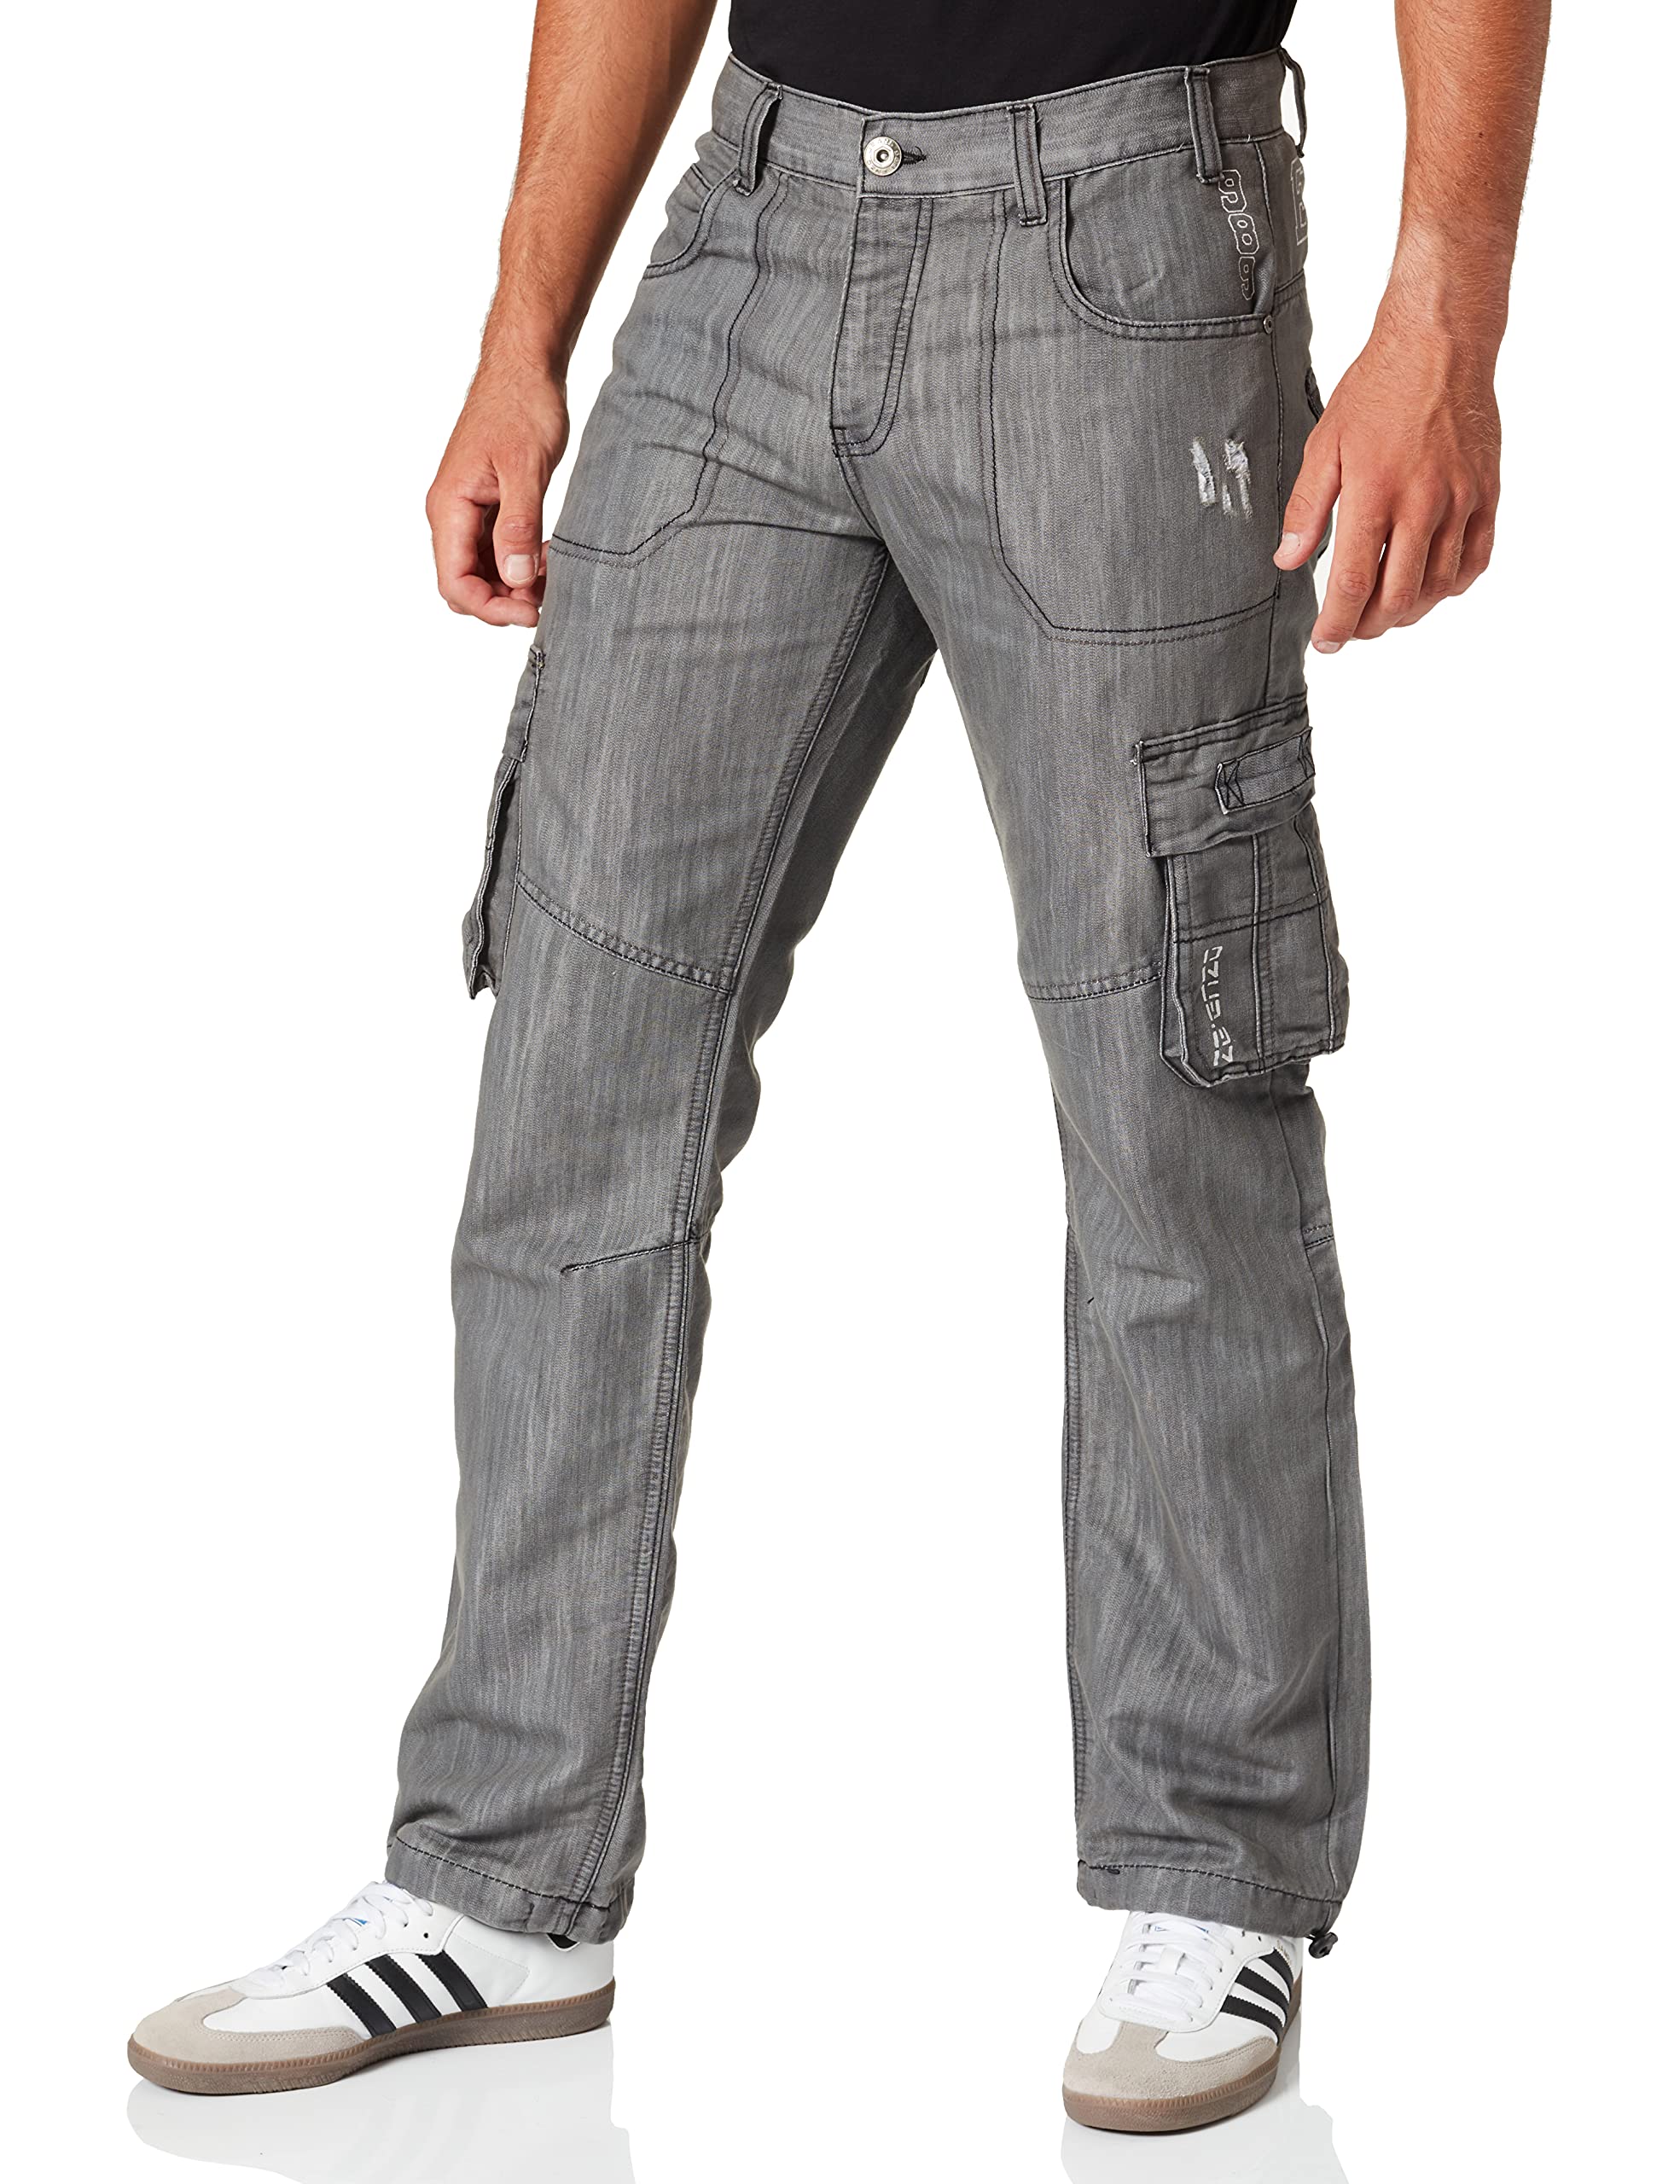 Enzo Herren Ez404 Loose Fit Jeans, Grau (Grey Grey), 46W / 32L